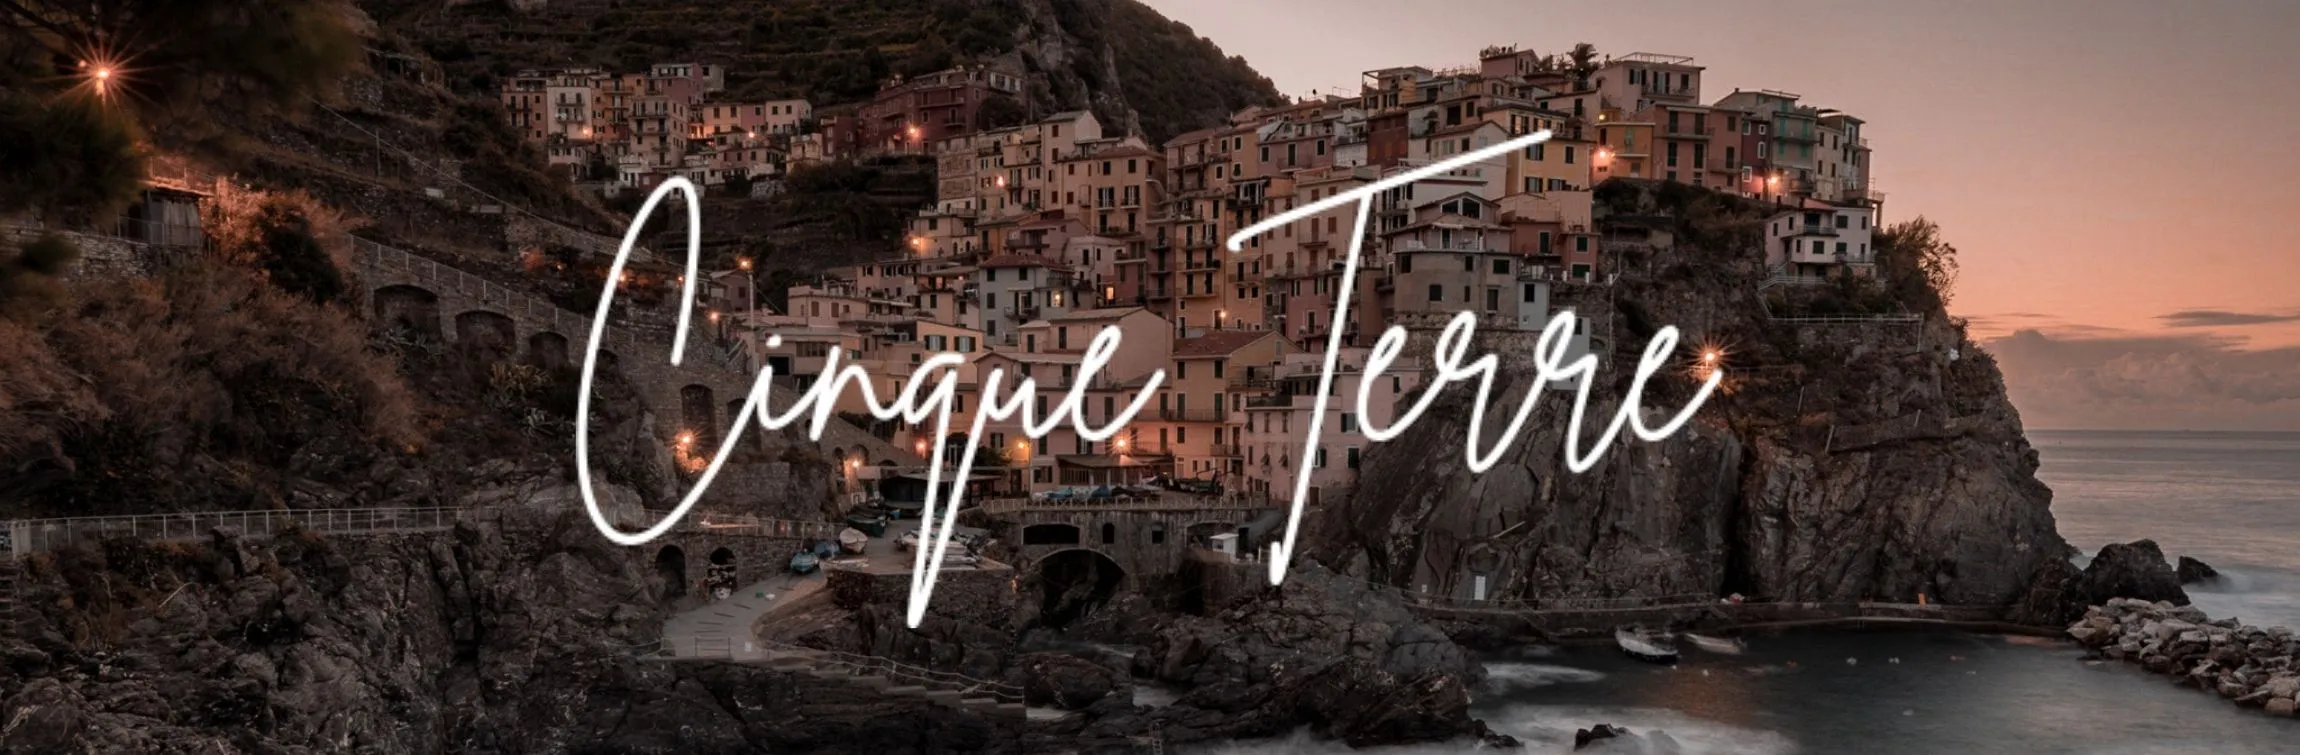 Cinque Terre – Der komplette Überblick